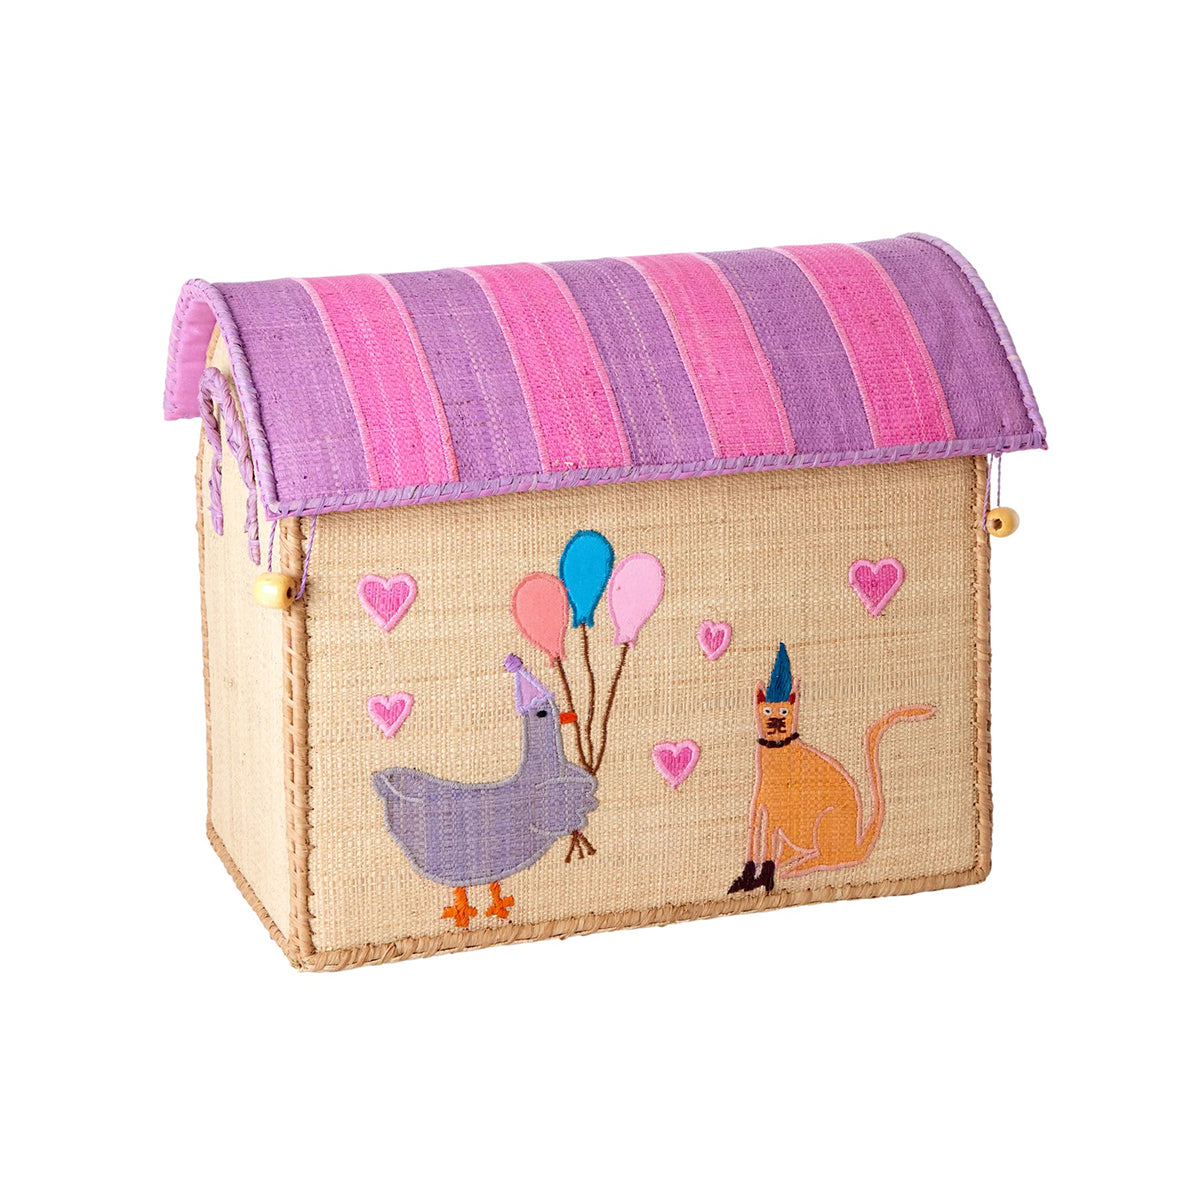 rice Raffia Toy Storage Basket: Pink Party Animal Theme - Small